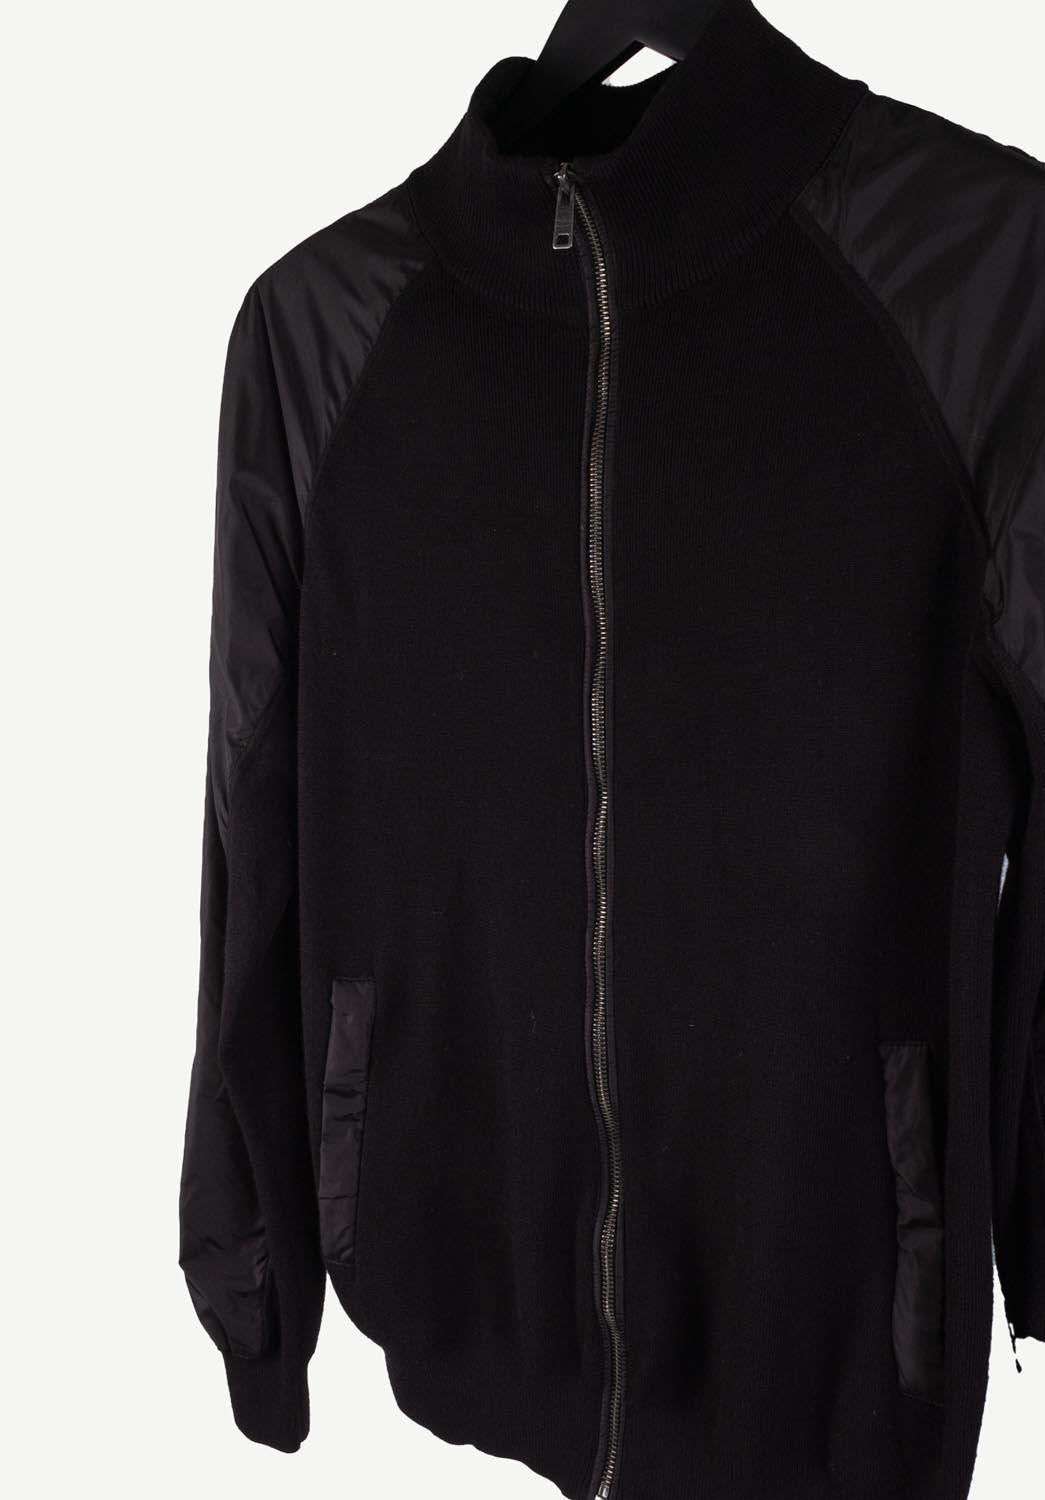 Black Prada Men Sweater Jacket Wool Nylon Zipped Size 50IT(Medium), S303 For Sale